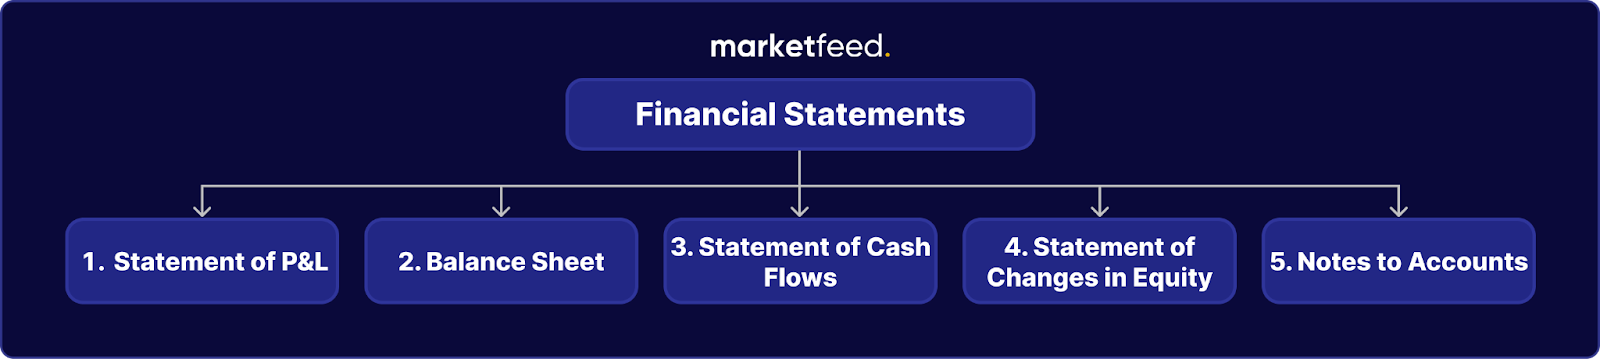 financial statement | marketfeed